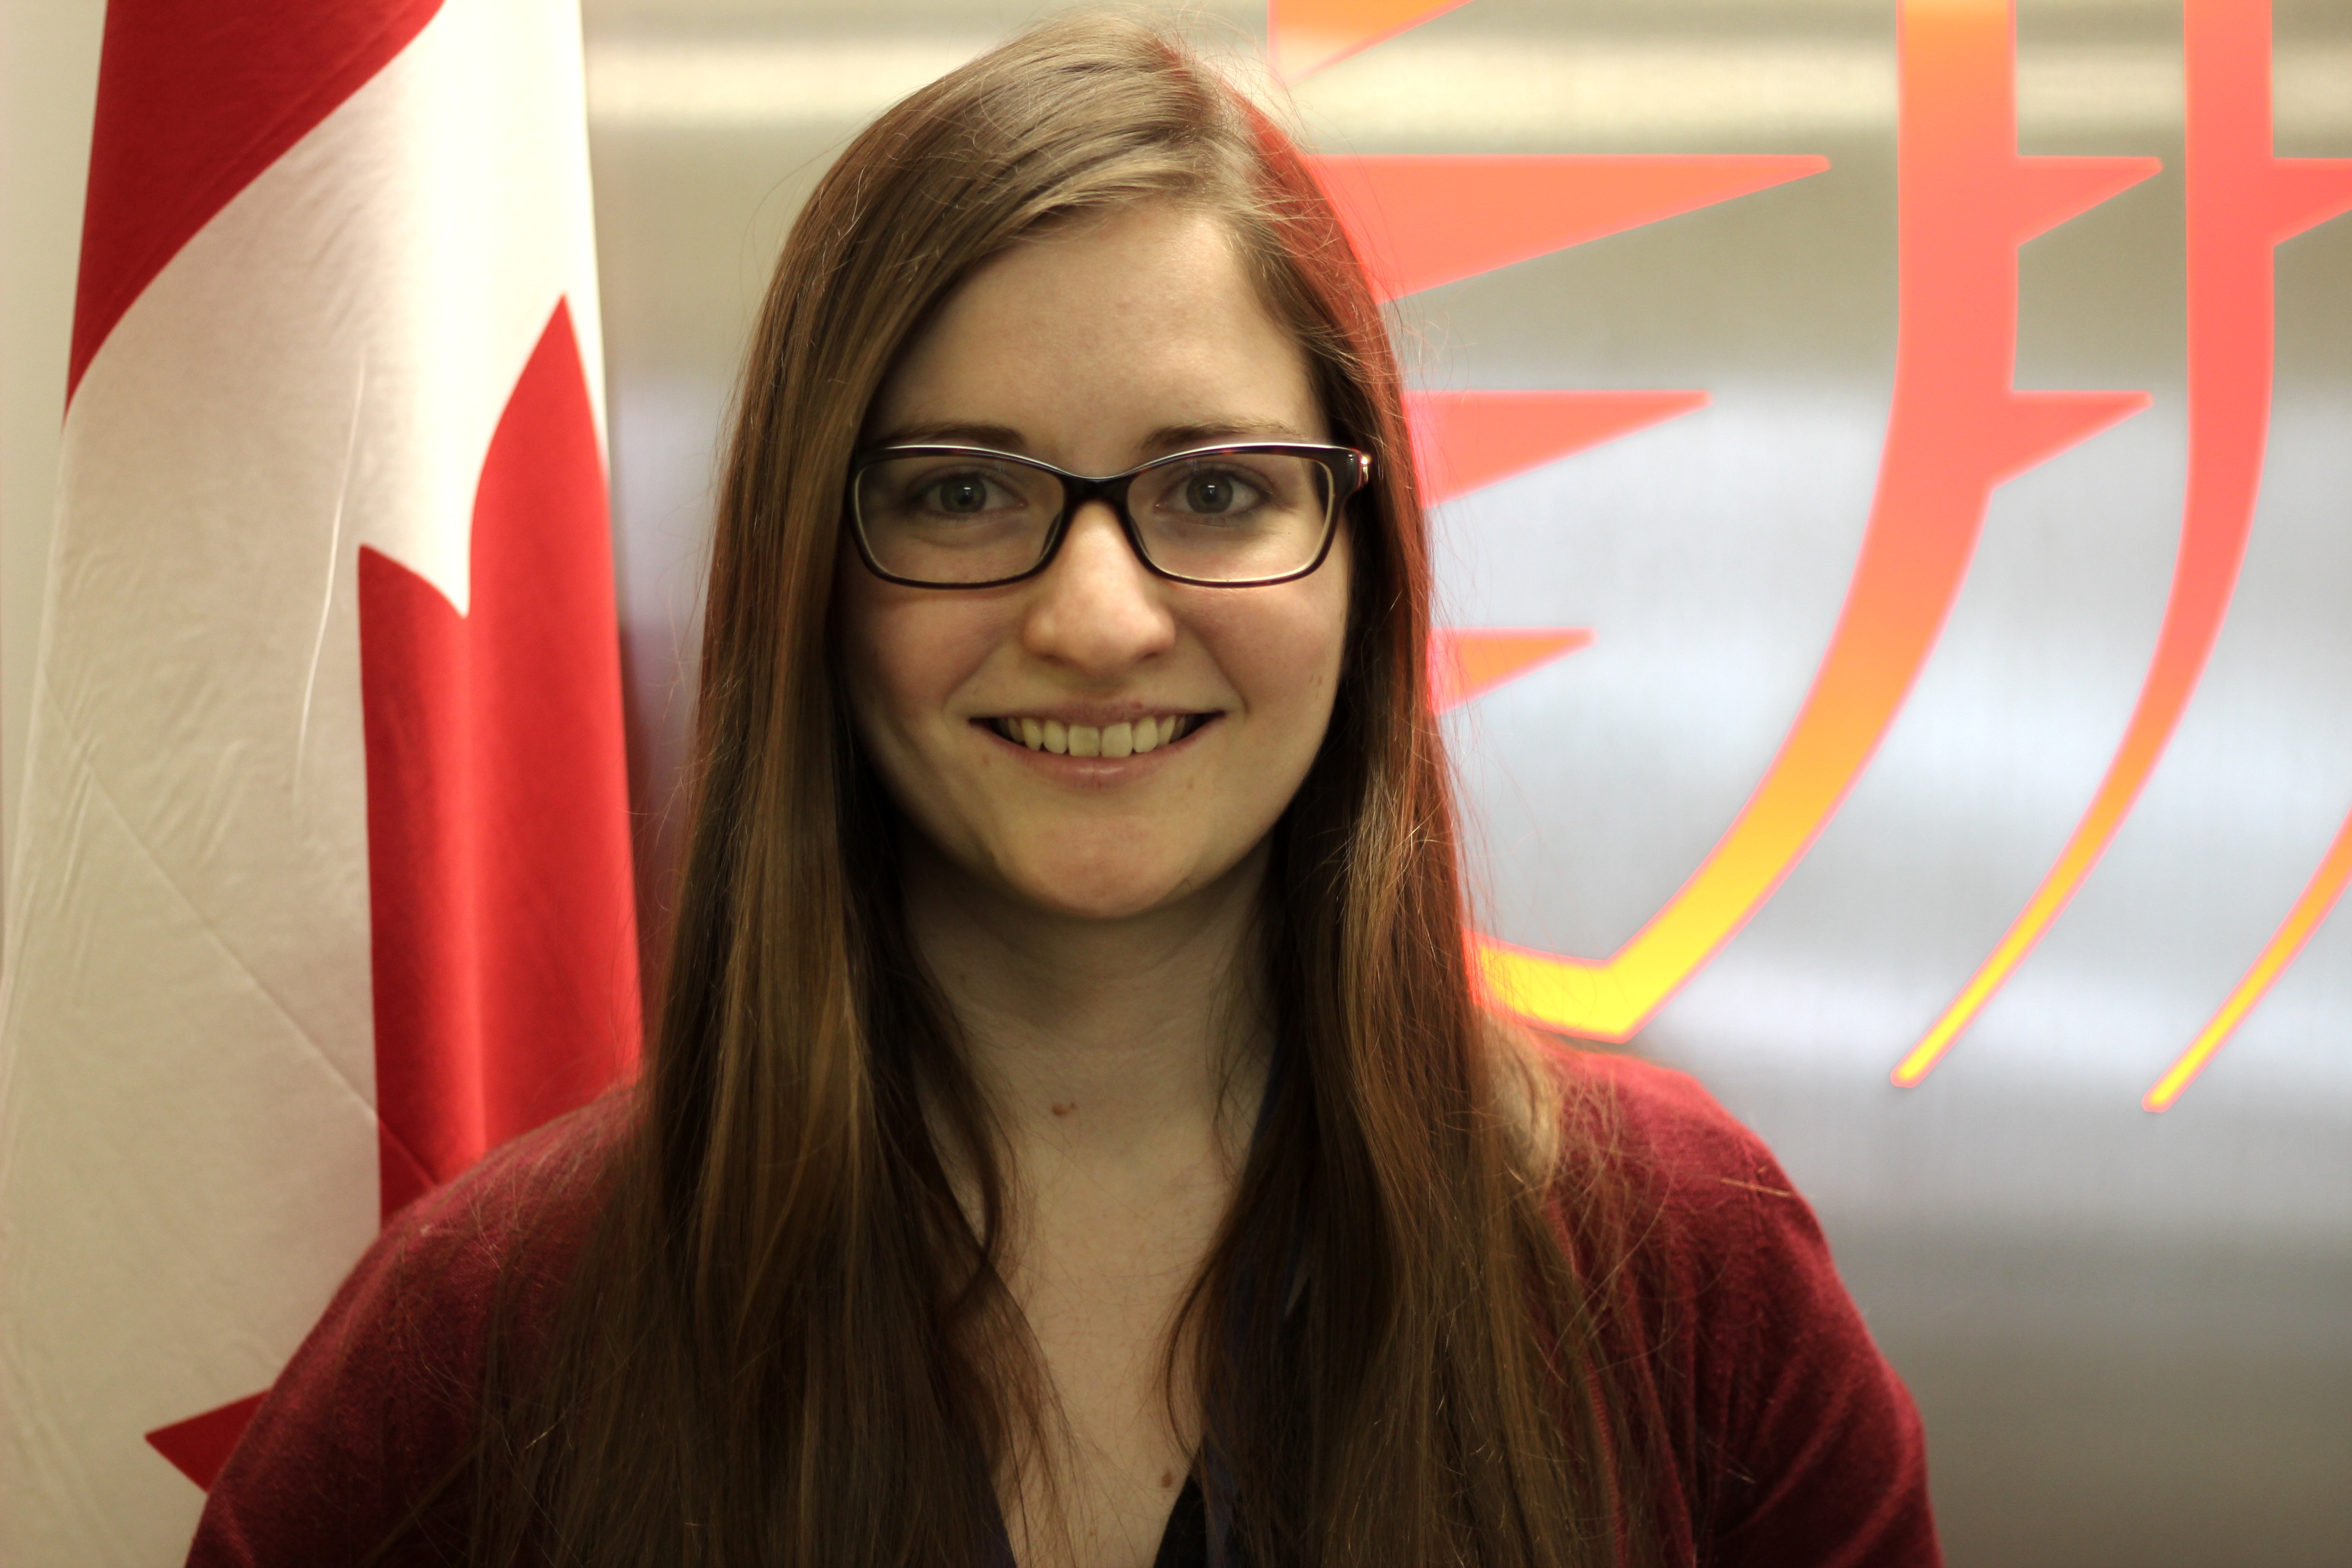 Allen-Vanguard's Amanda Lewis is a University of Ottawa graduate in electrical engineering